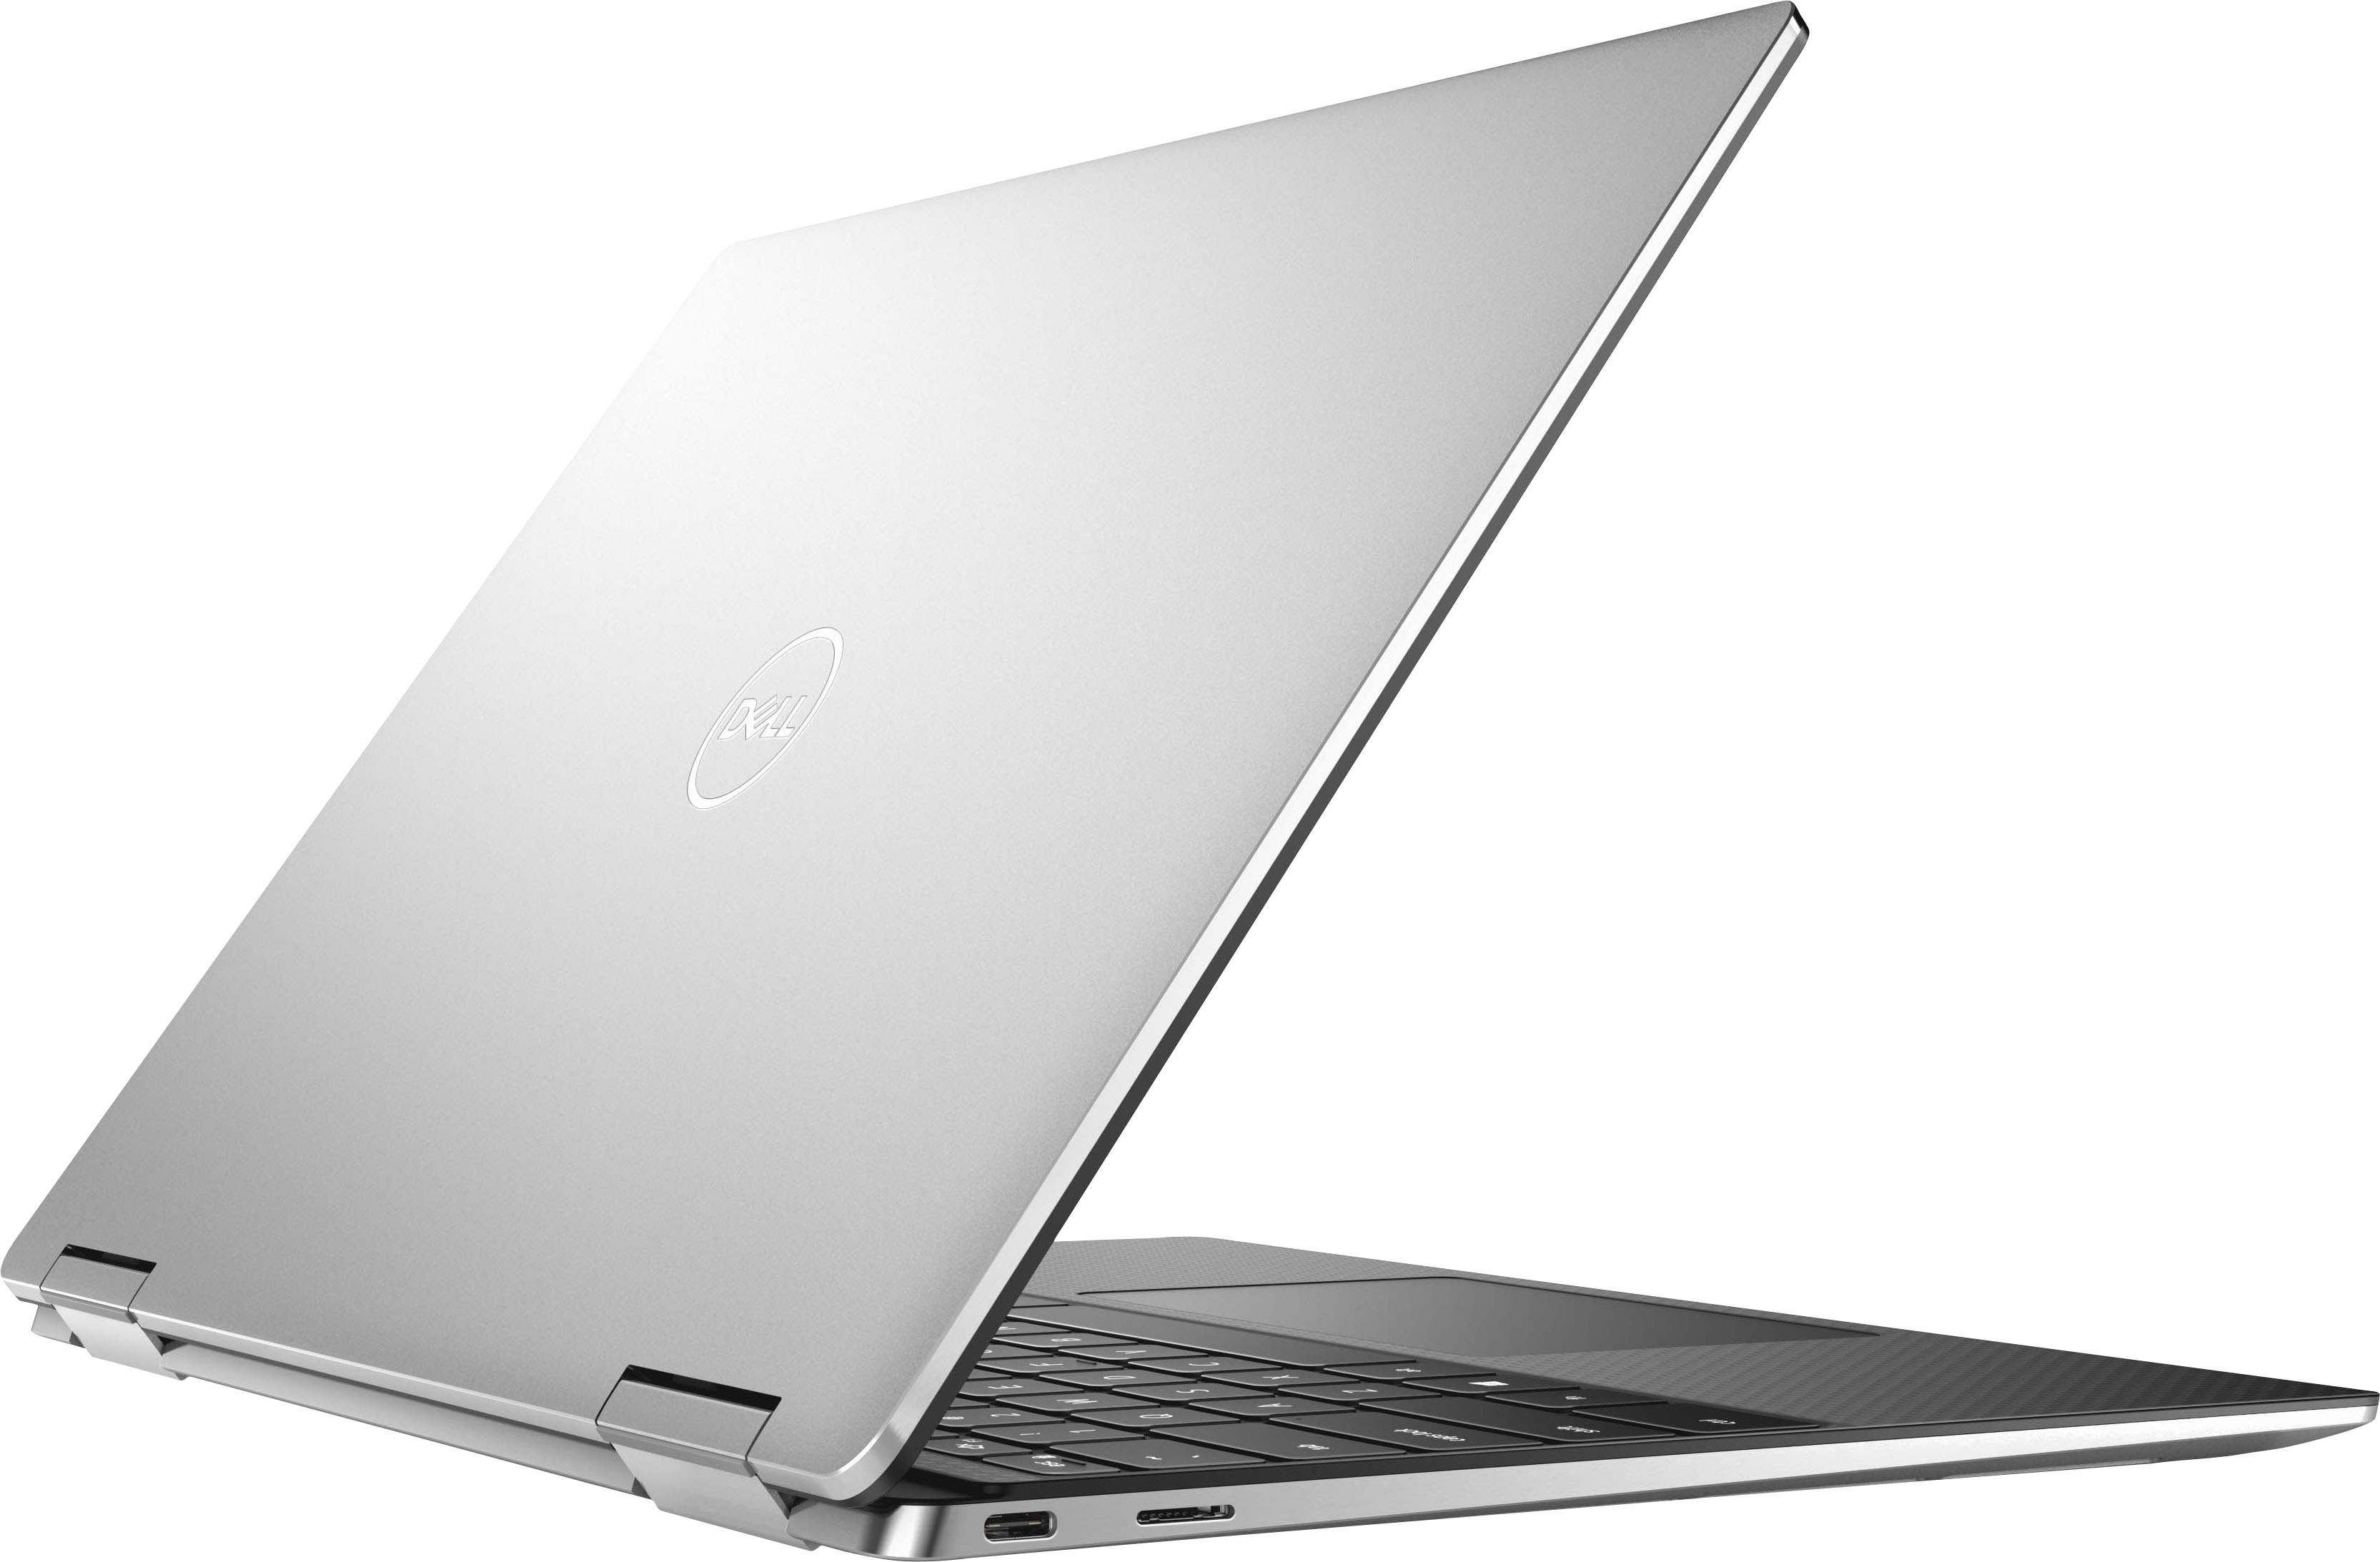 Dell XPS 13 2-in-1 Laptop - w/ Windows 11 Os & 12th Gen Intel Core - 16 GB - 512G - x29315fucxh